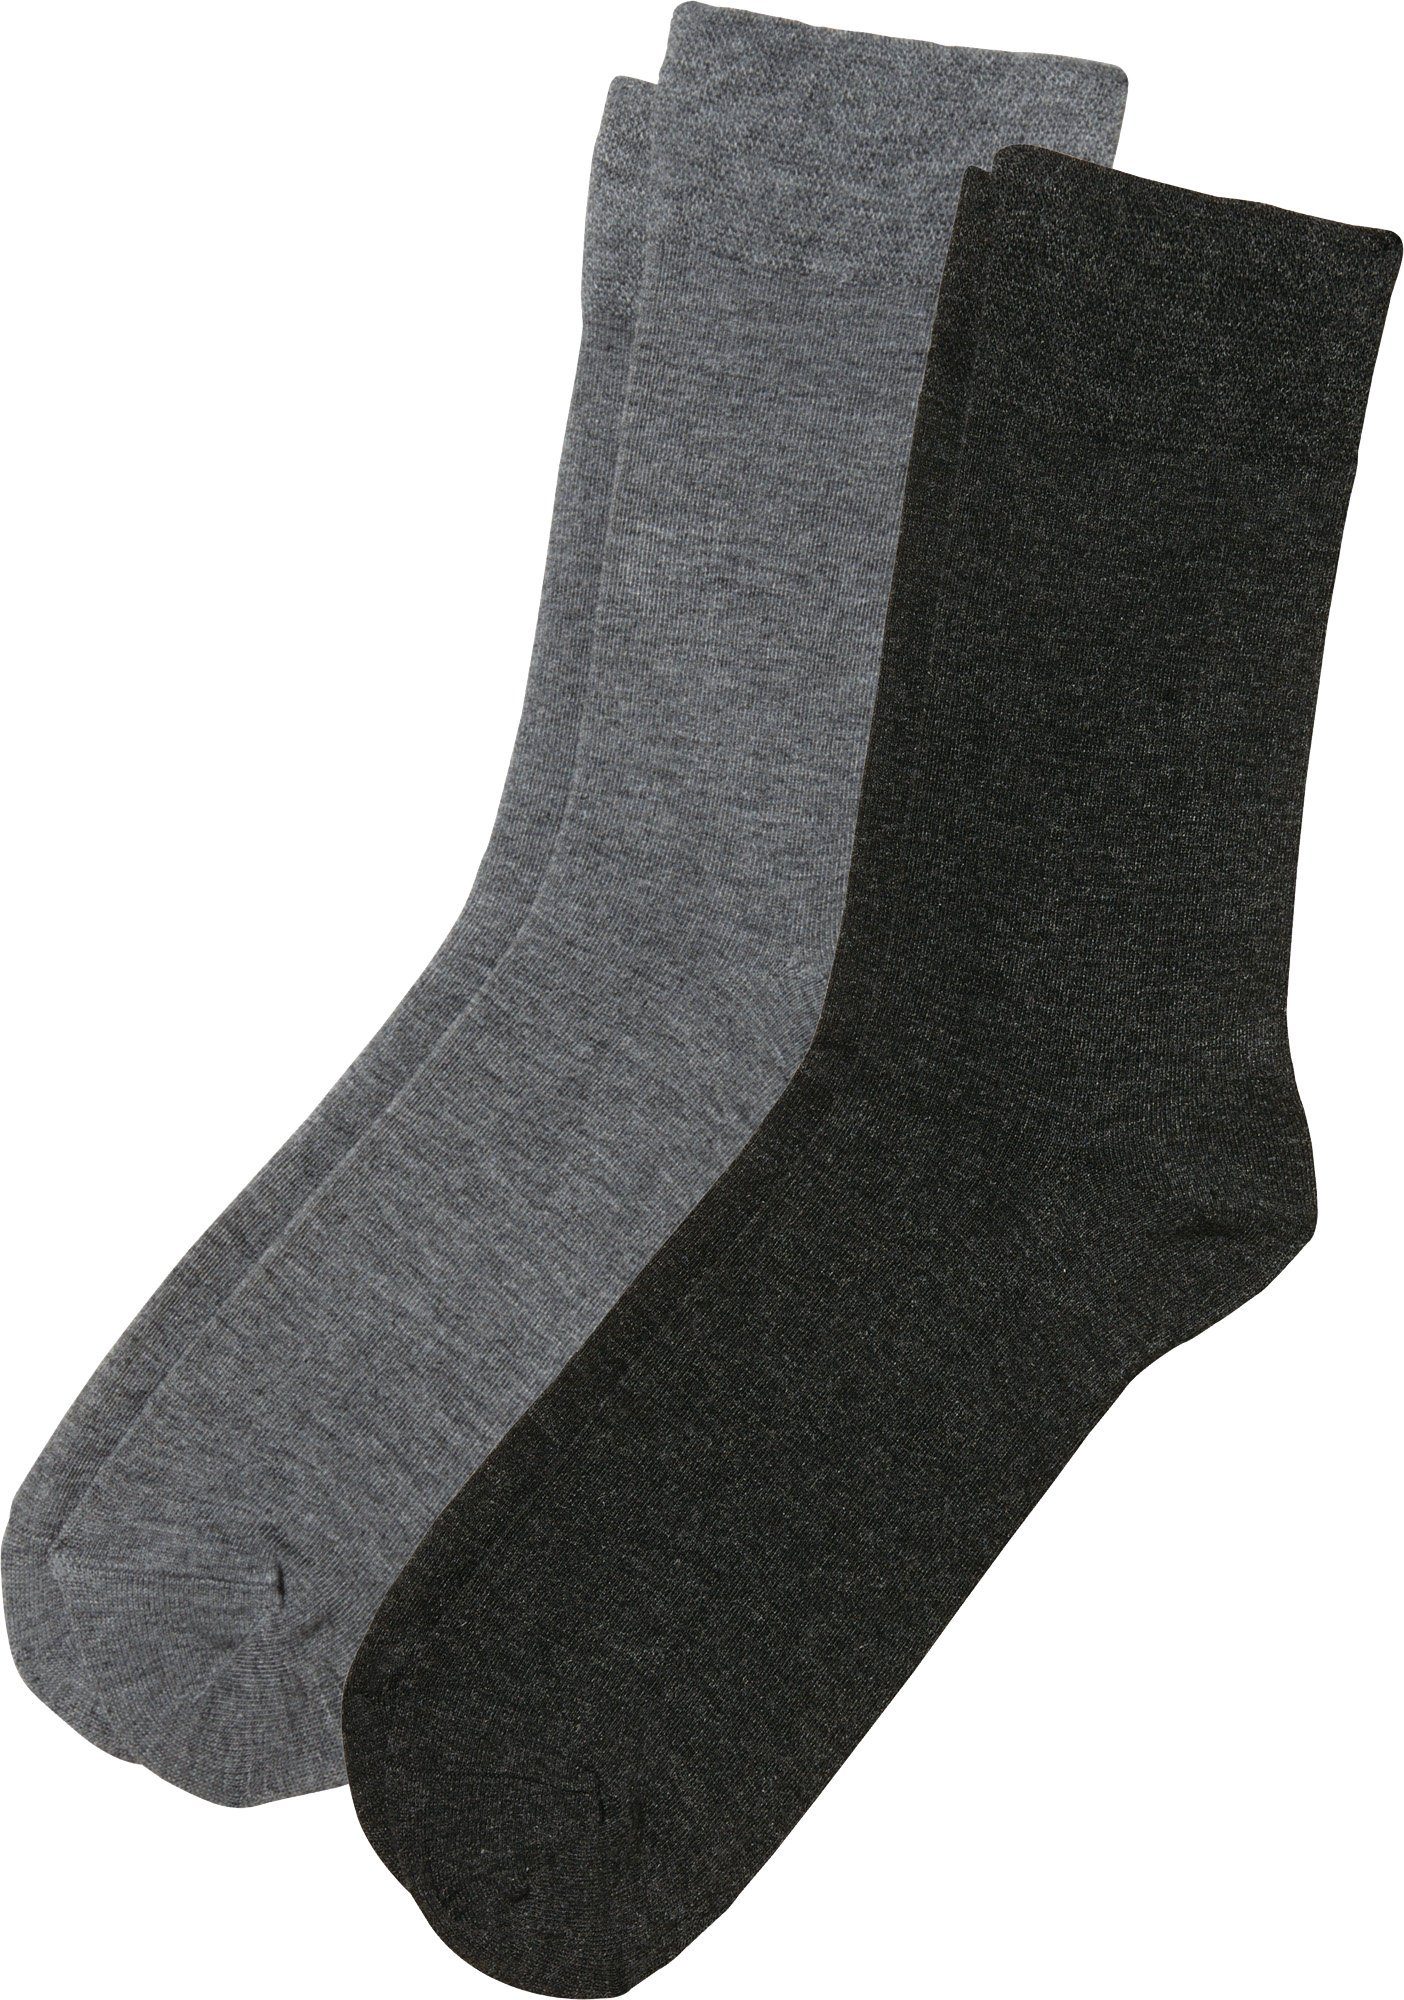 Erwin Müller Paar Herren-Socken Socken (4-Paar) grau/anthrazit Uni 2